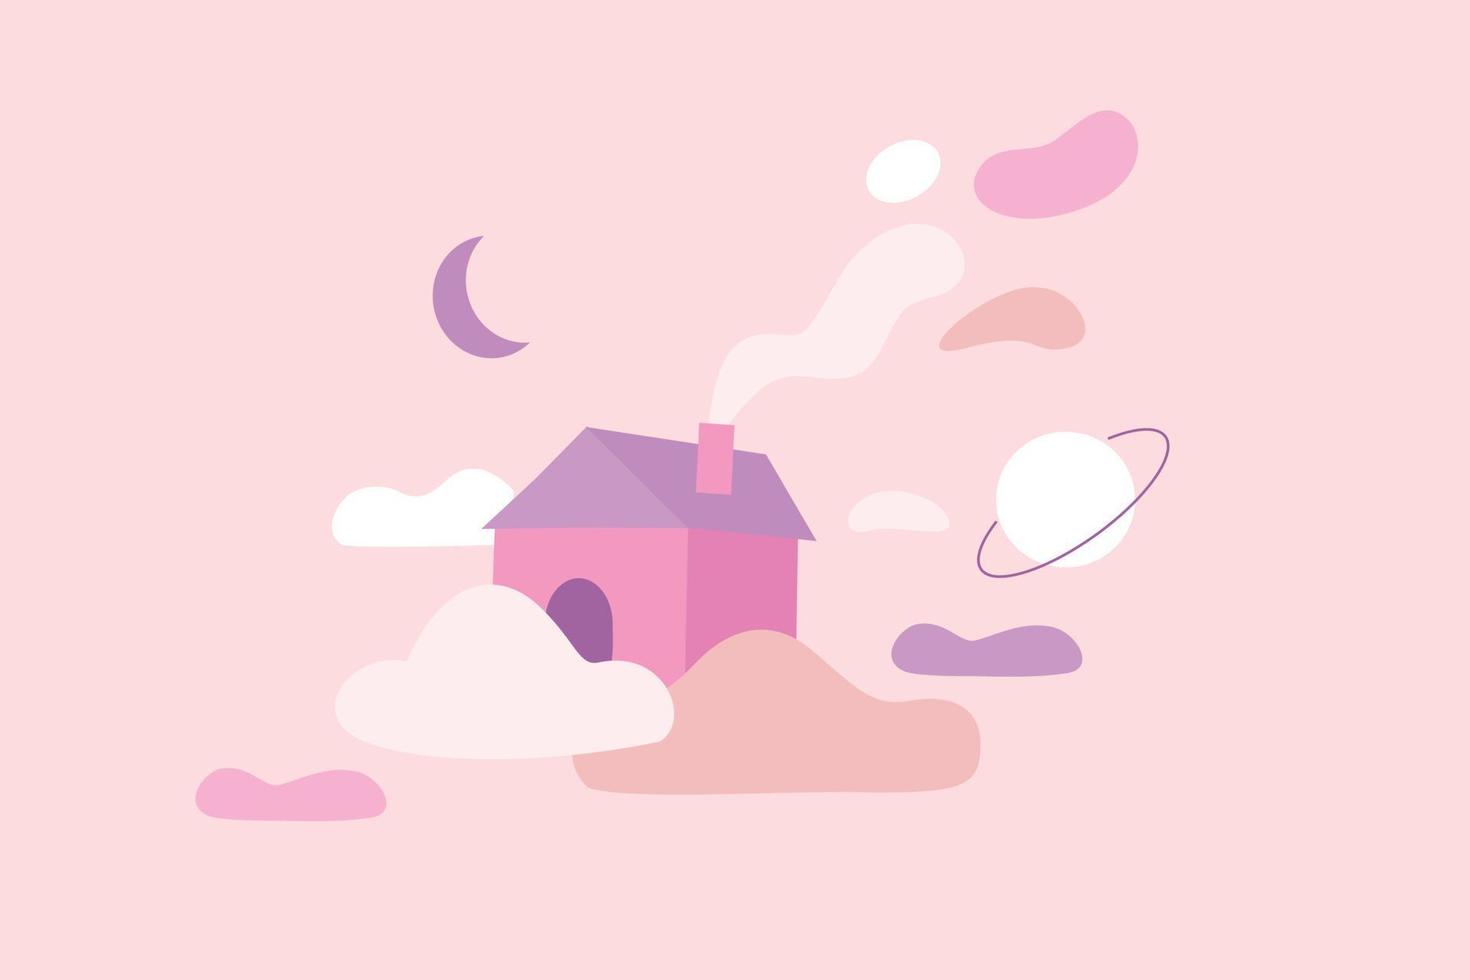 süßes Haus über der Wolke im Fantasy-Thema. naives Illustrationsdesign vektor